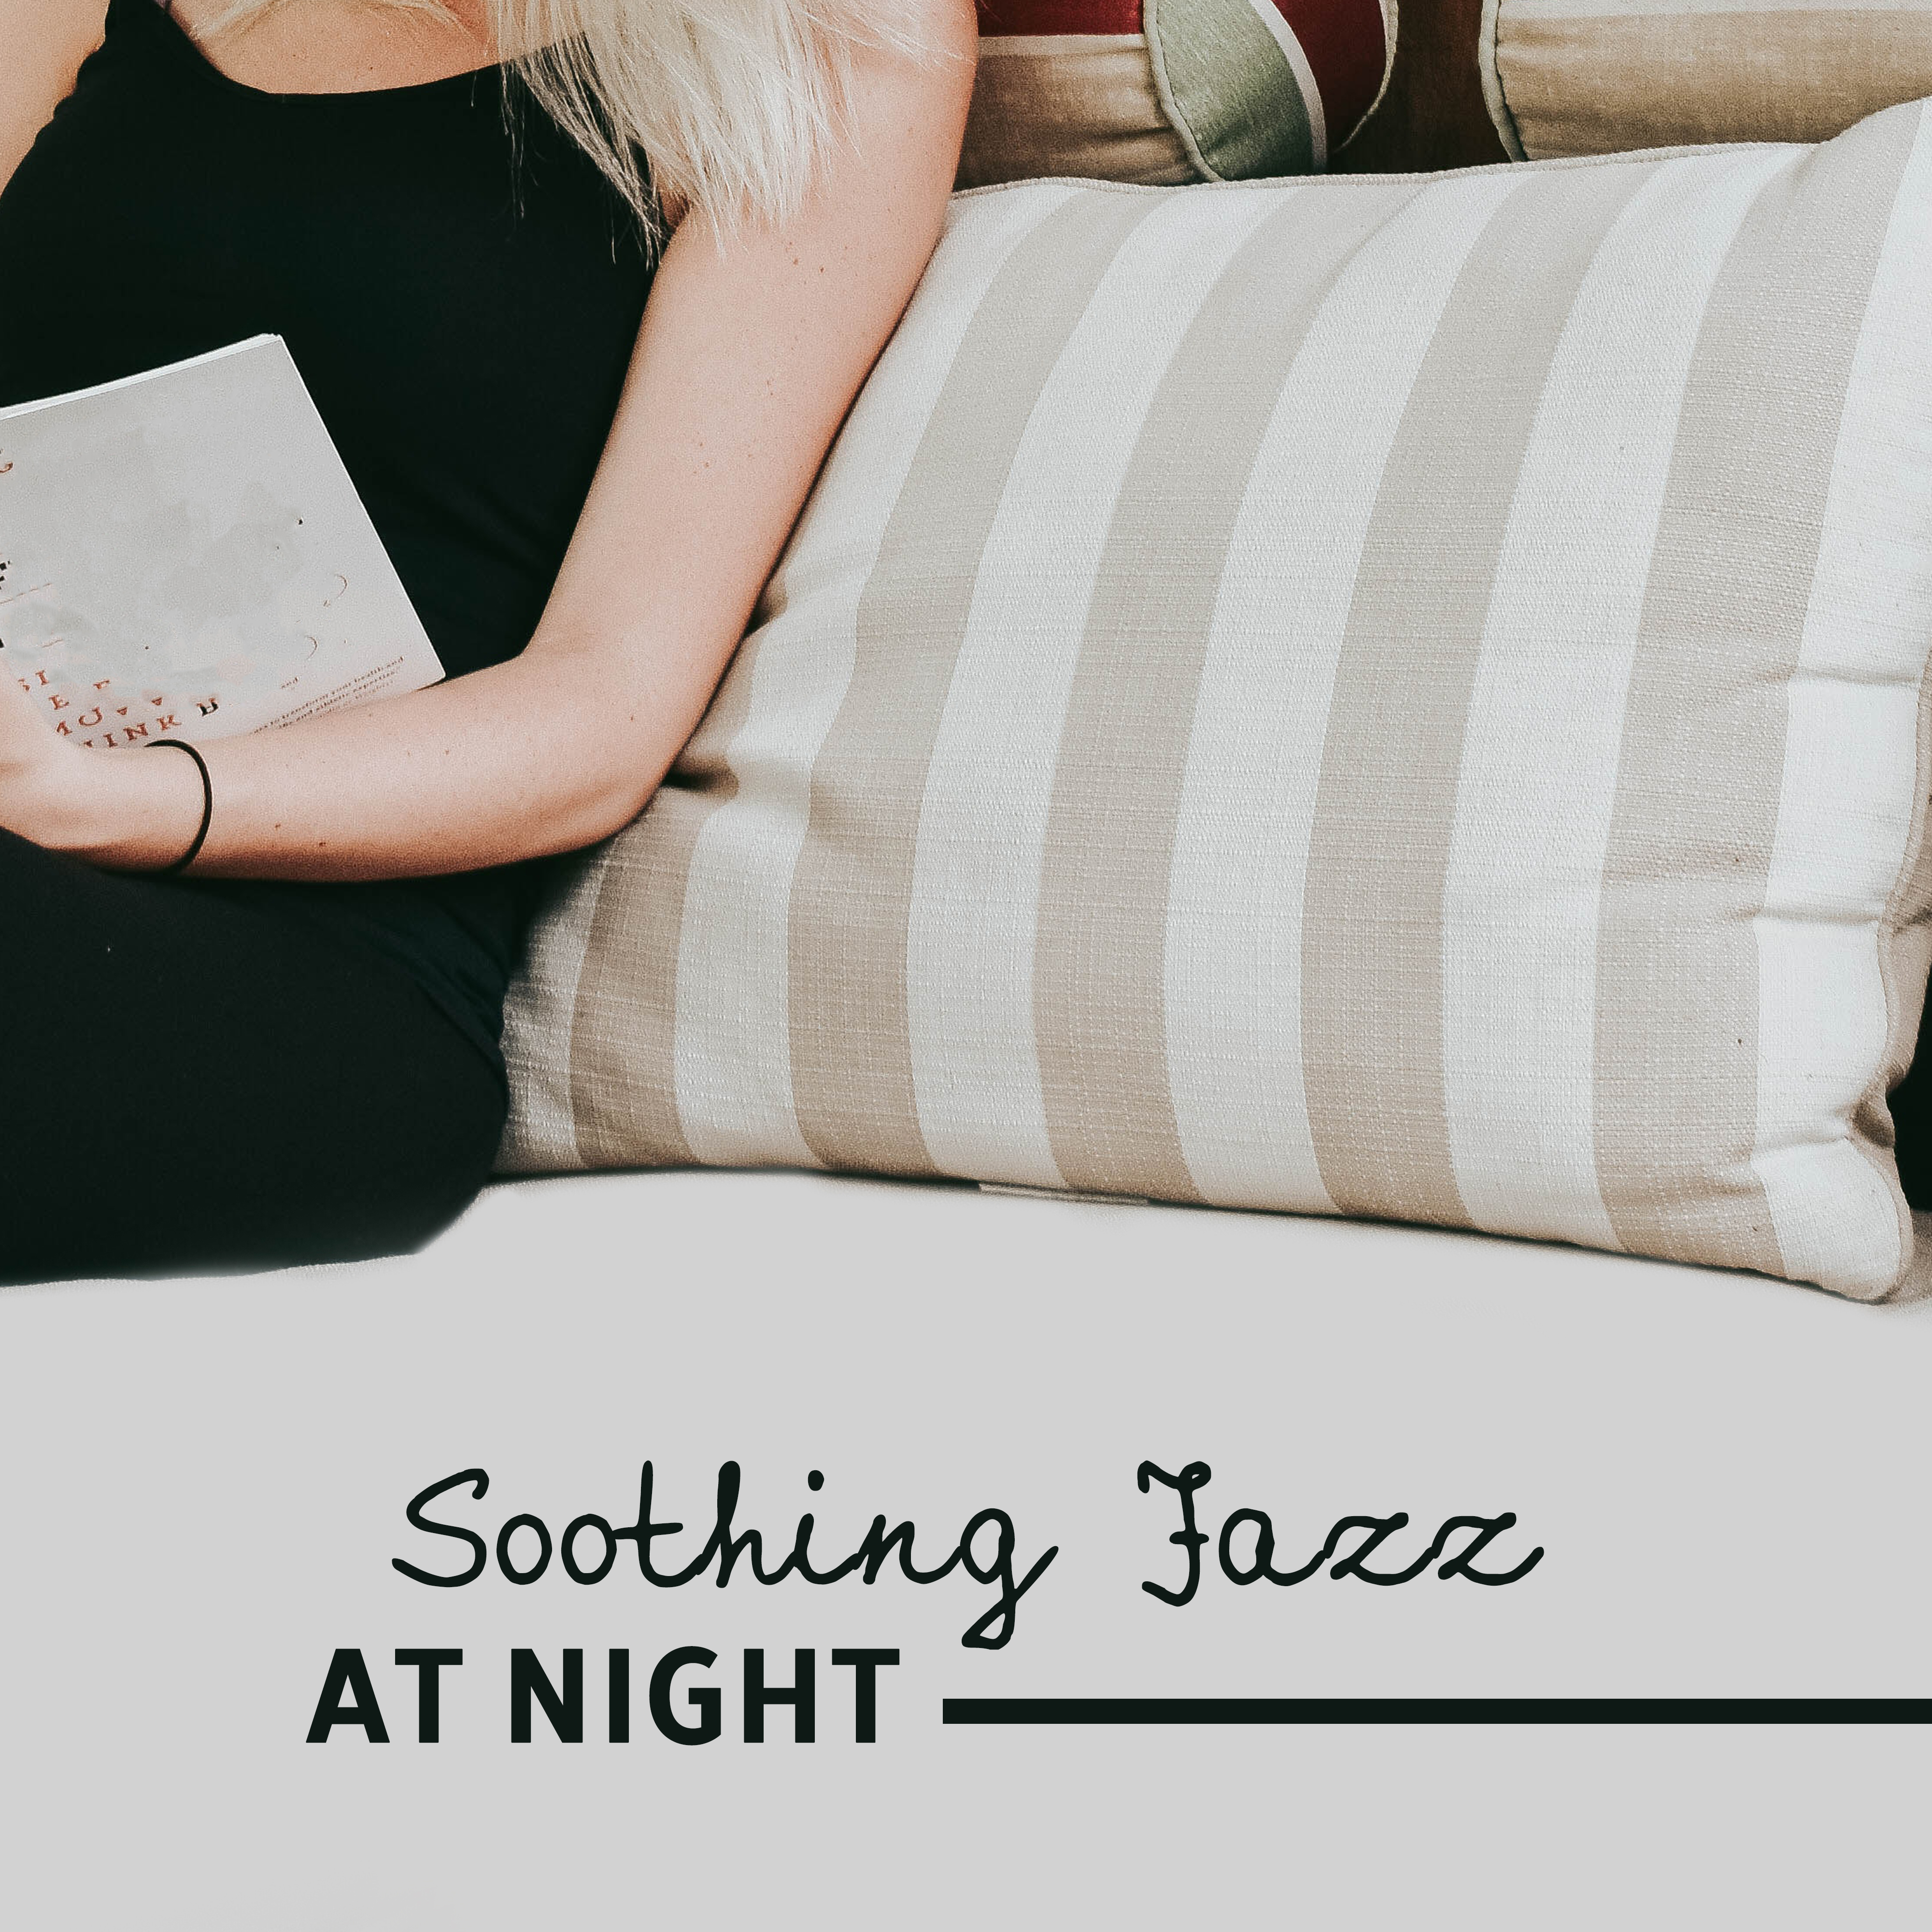 Soothing Jazz at Night